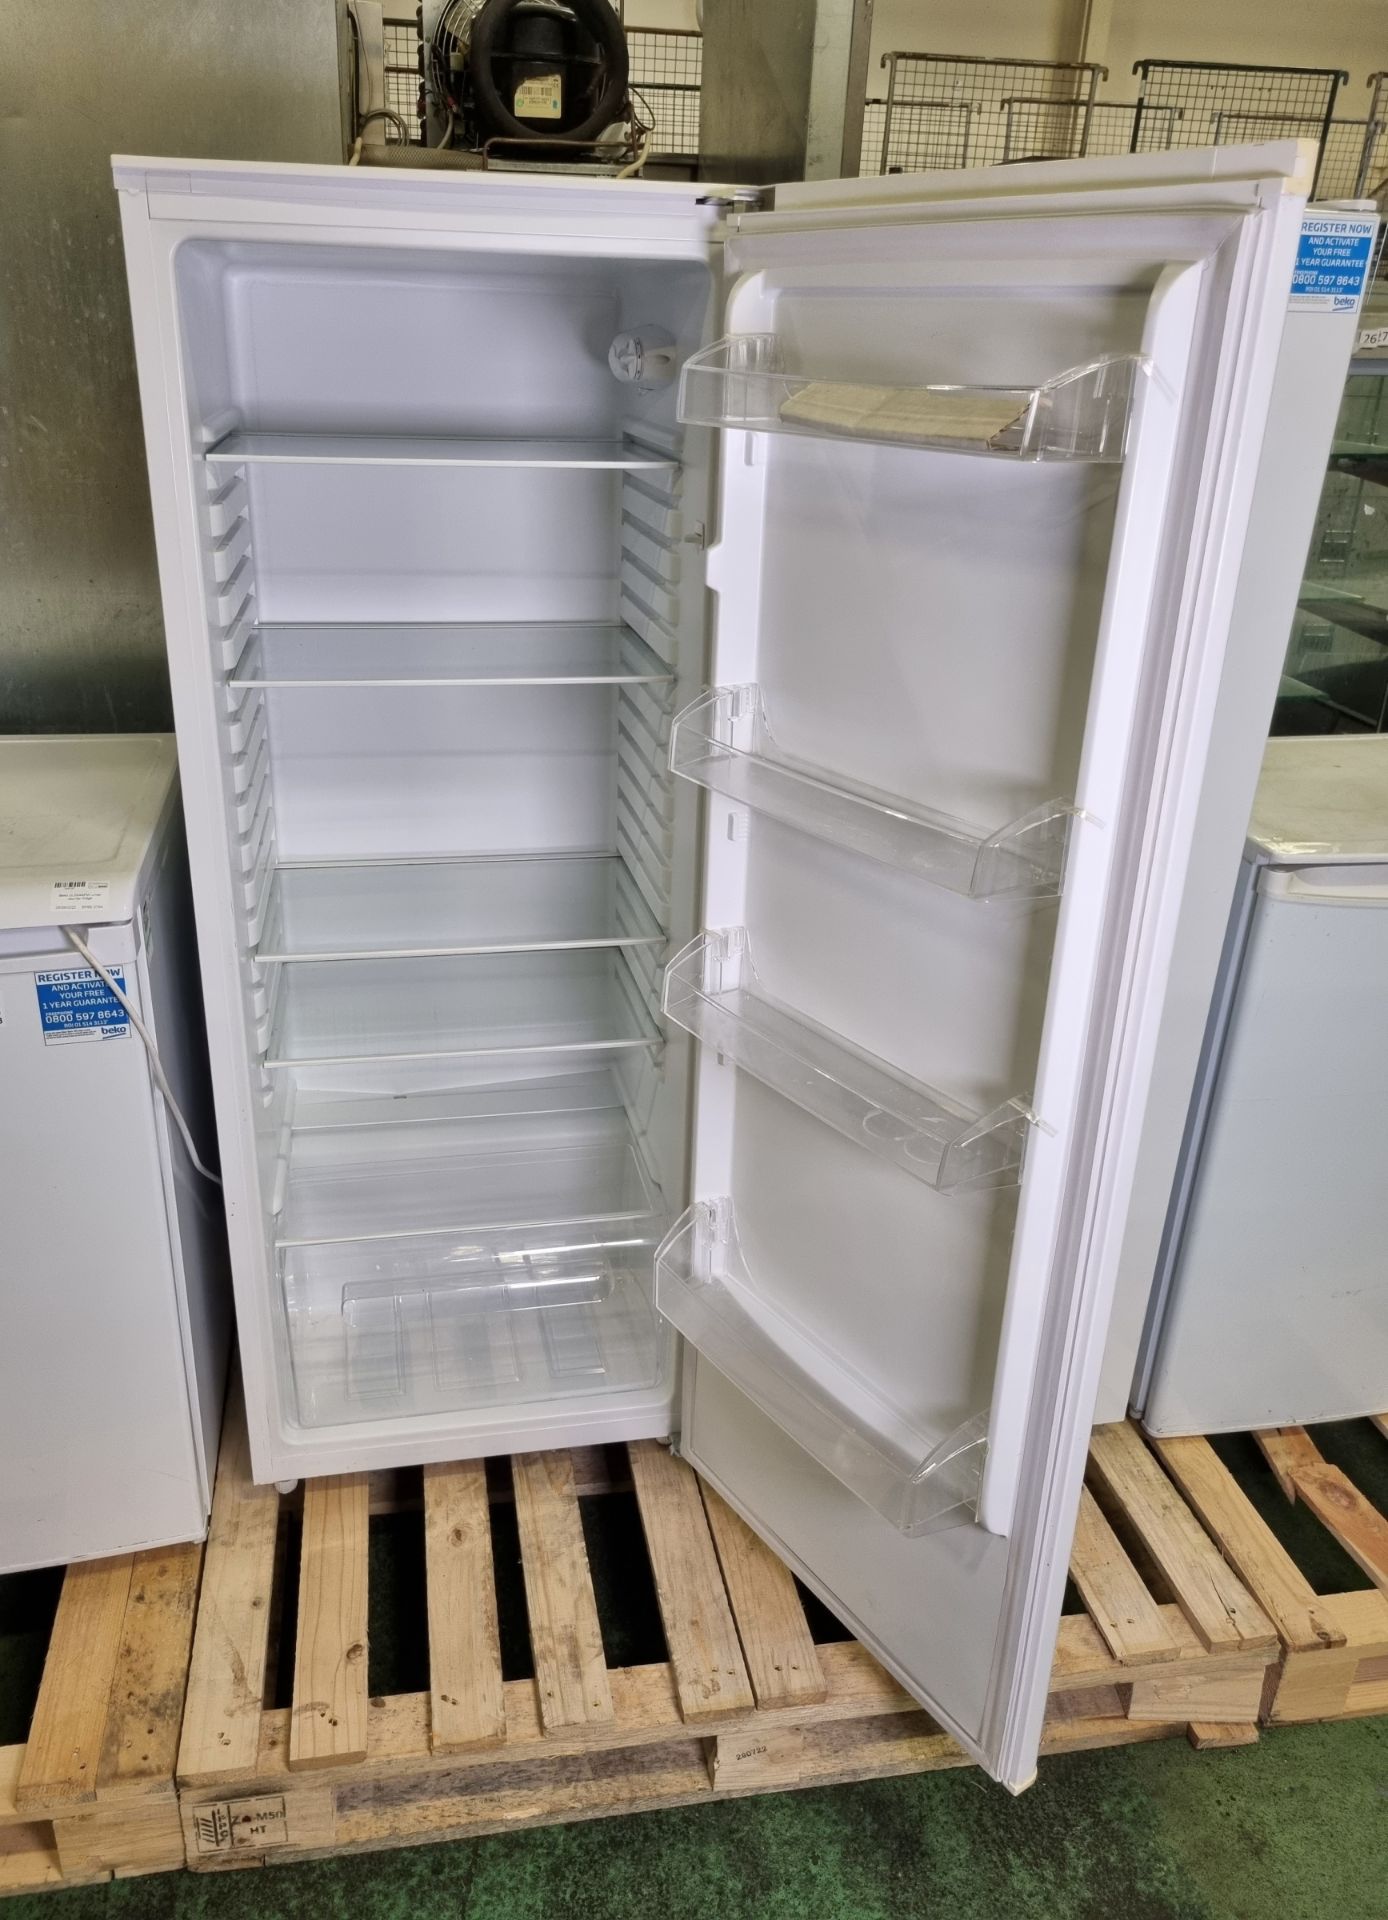 Fridgemaster MTL55249 freestanding tall fridge - Image 3 of 3